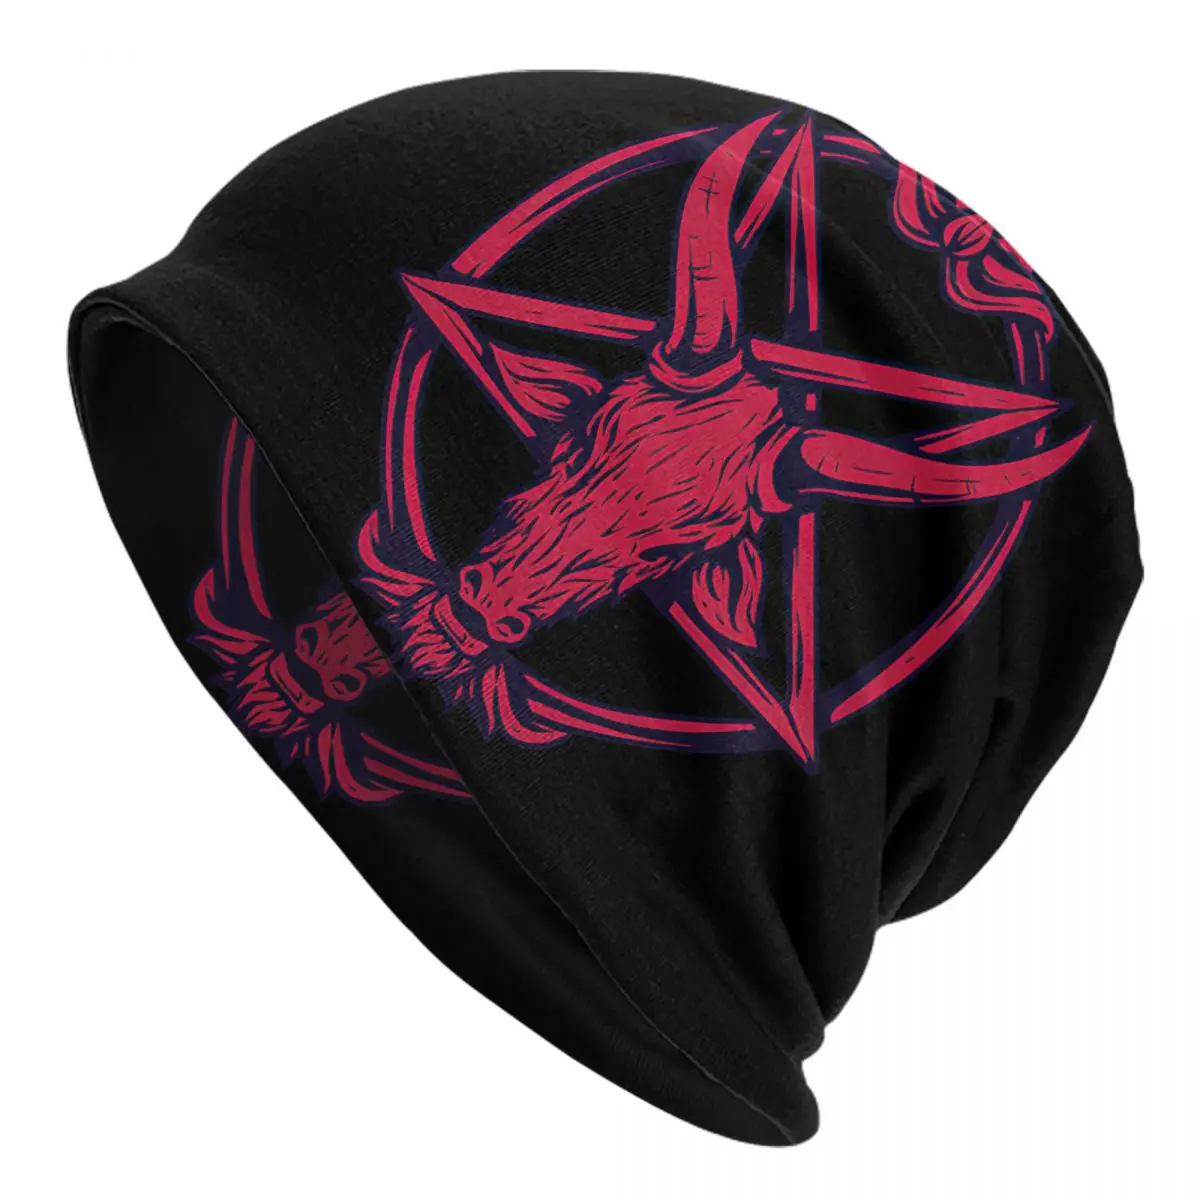 Free Will Satanic Goat Pentagram Adult Men's Women's Knit Hat Keep warm winter Funny knitted hat